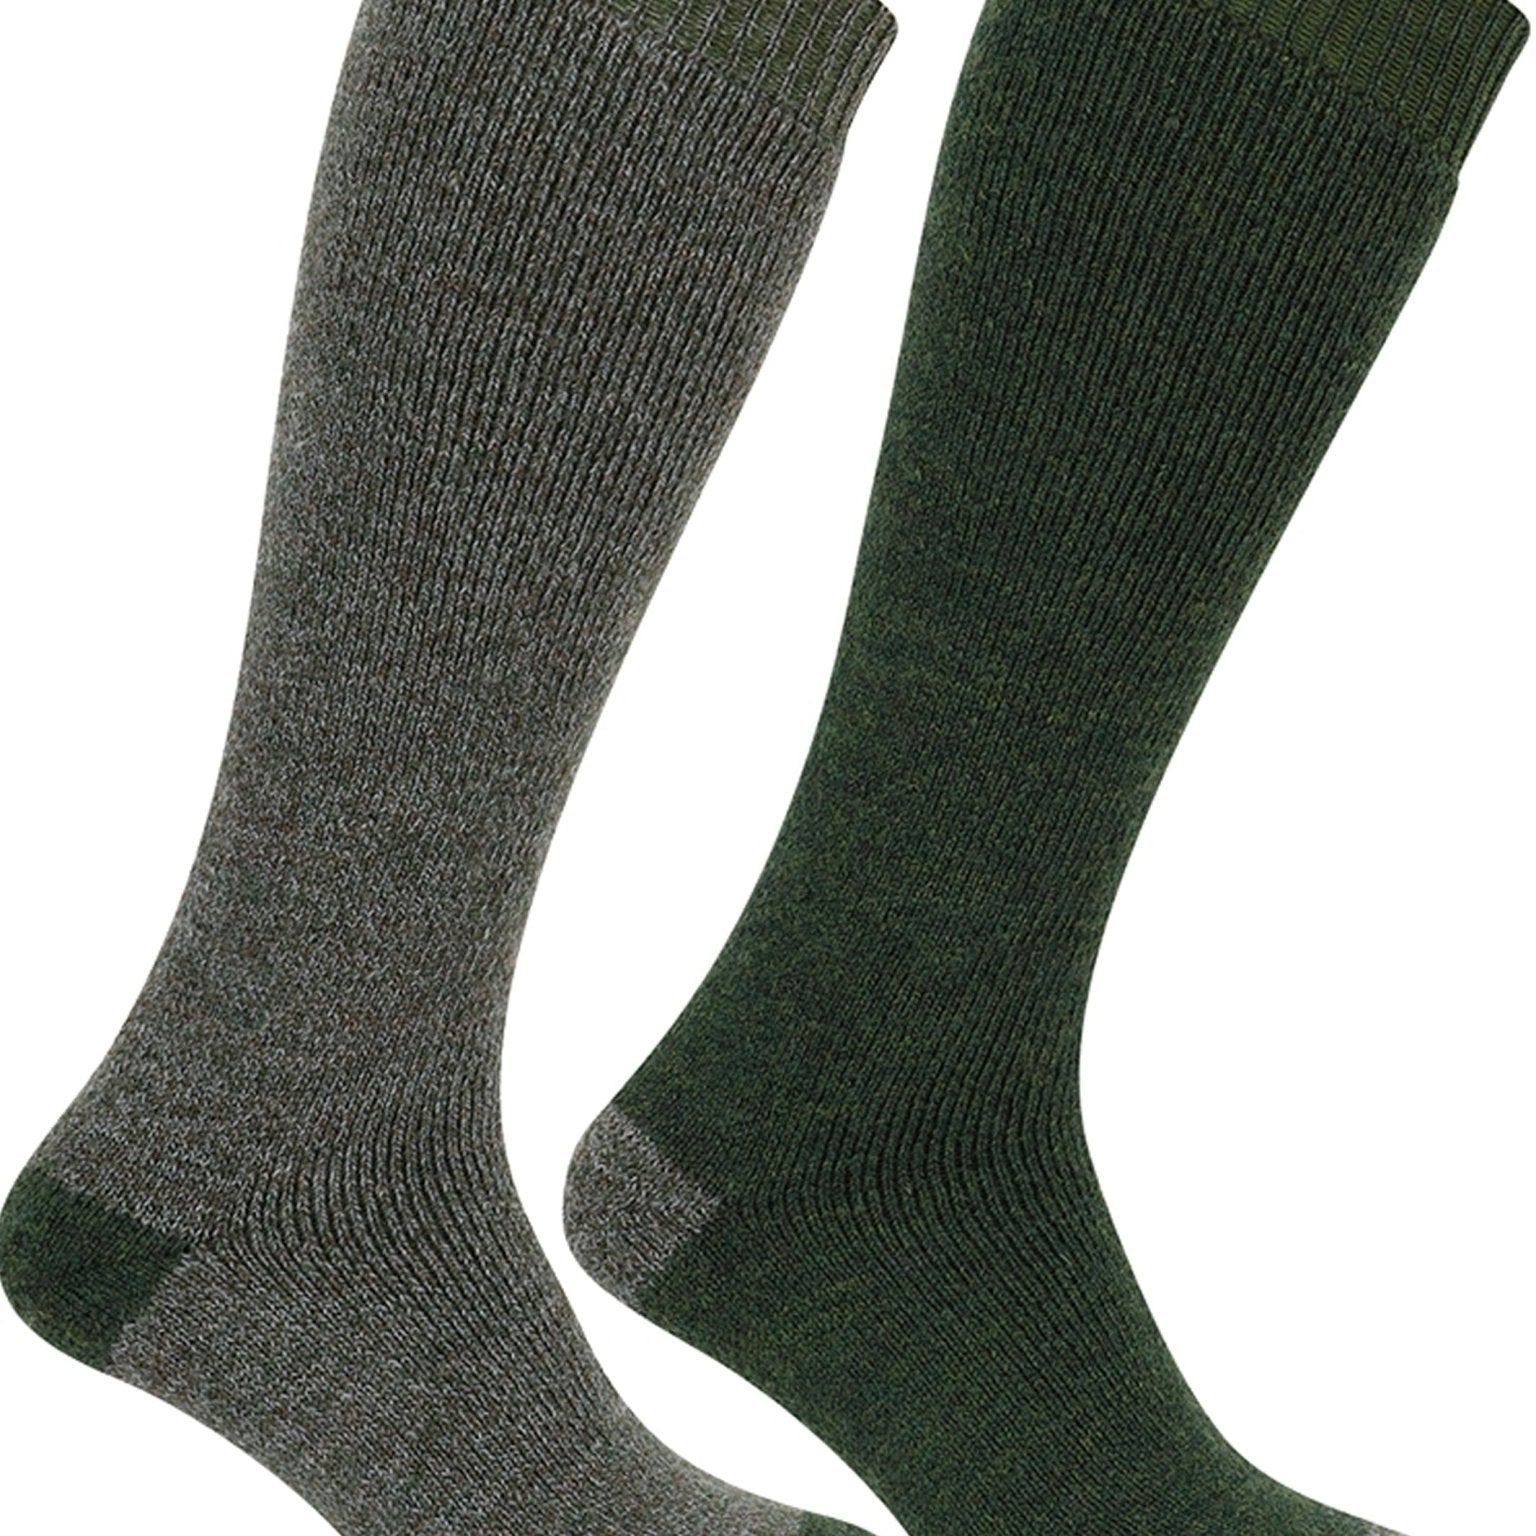 4elementsclothingHoggs of FifeHoggs of Fife - 1903 Long Country Socks - outdoor merino wool Socks (Twin Pack Mens sock)Socks1903/TL/1